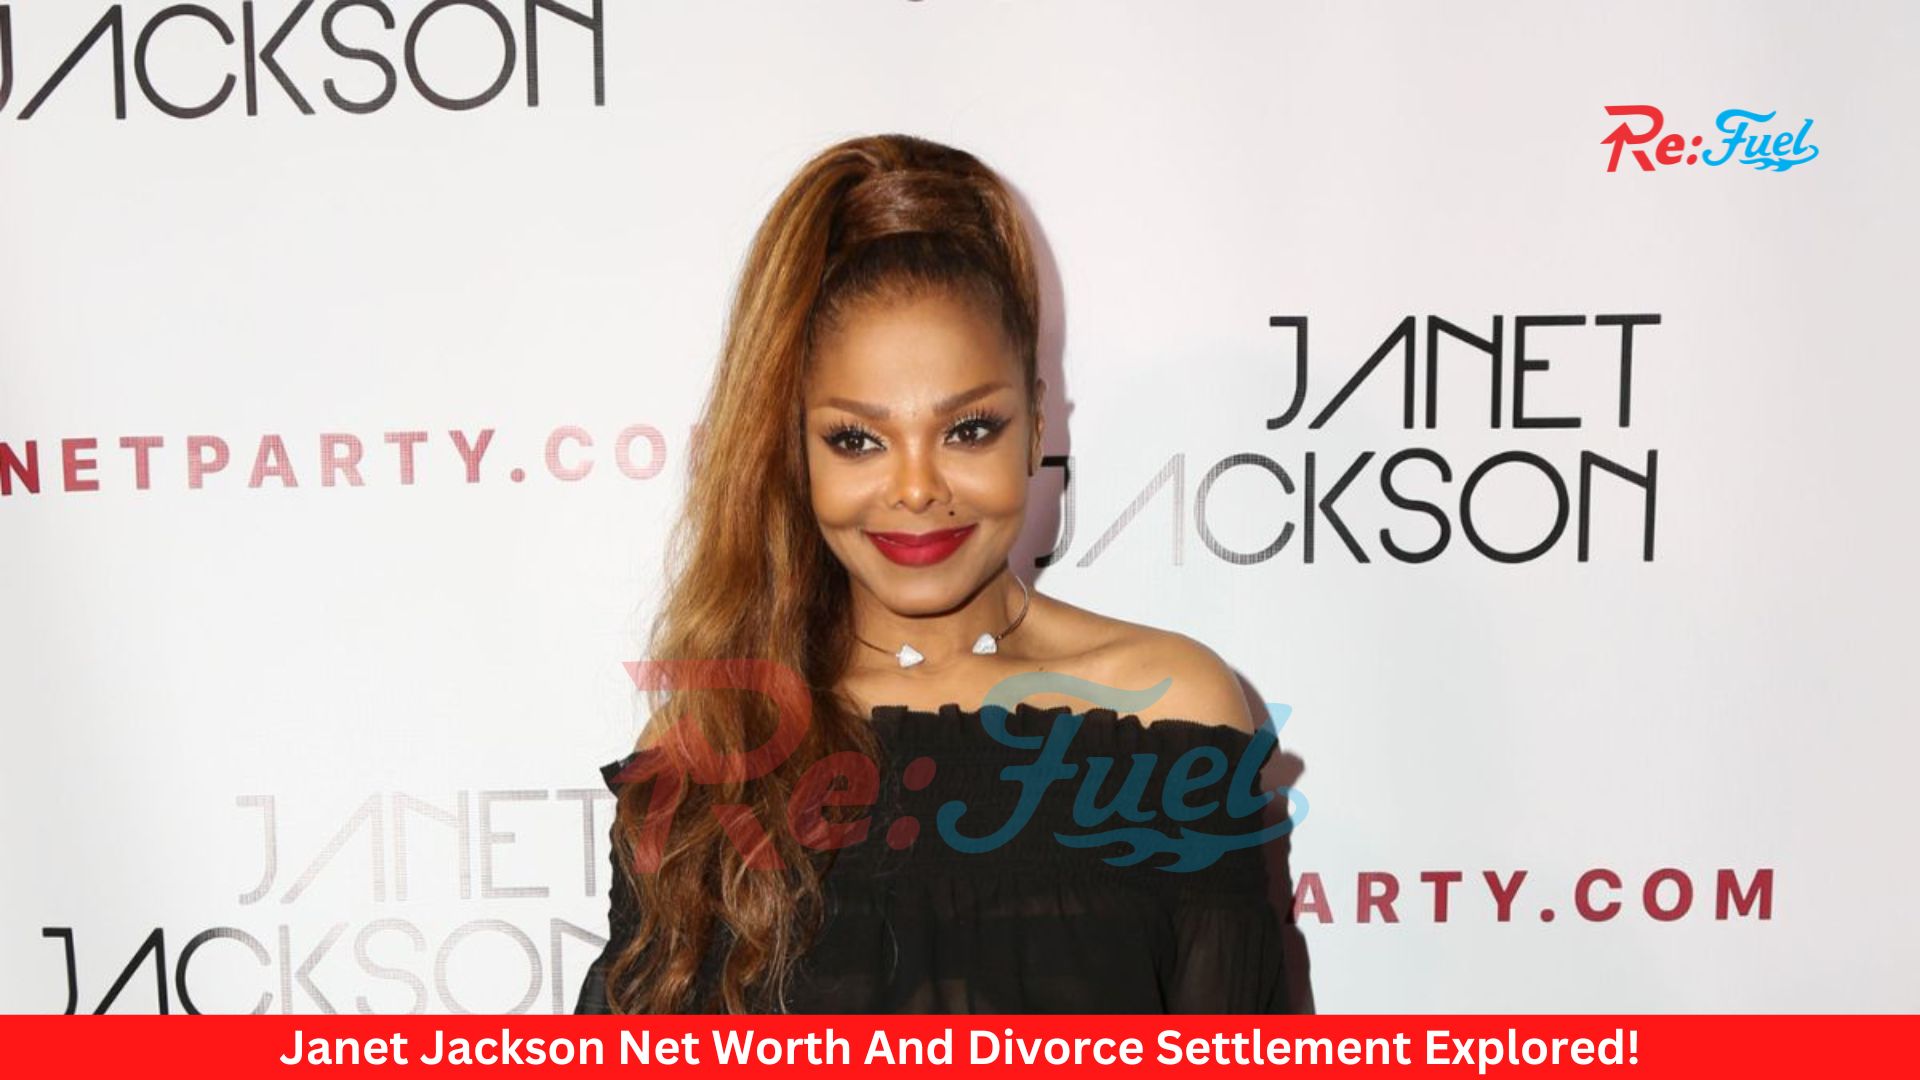 Janet Jackson Net Worth And Divorce Settlement Explored!